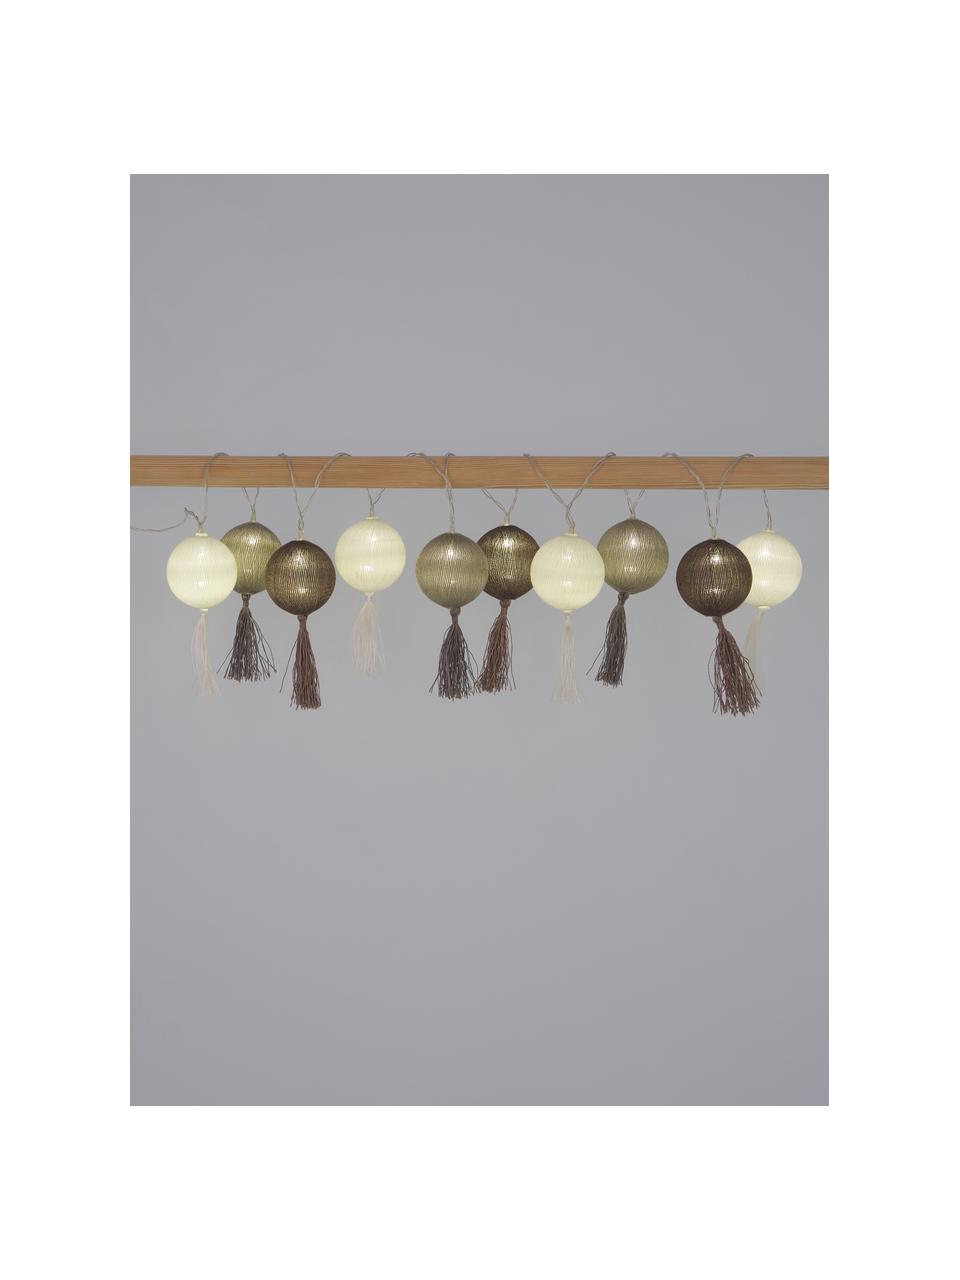 Guirlande lumineuse LED Jolly Tassel, 185 cm, Blanc, brun, beige, long. 185 cm